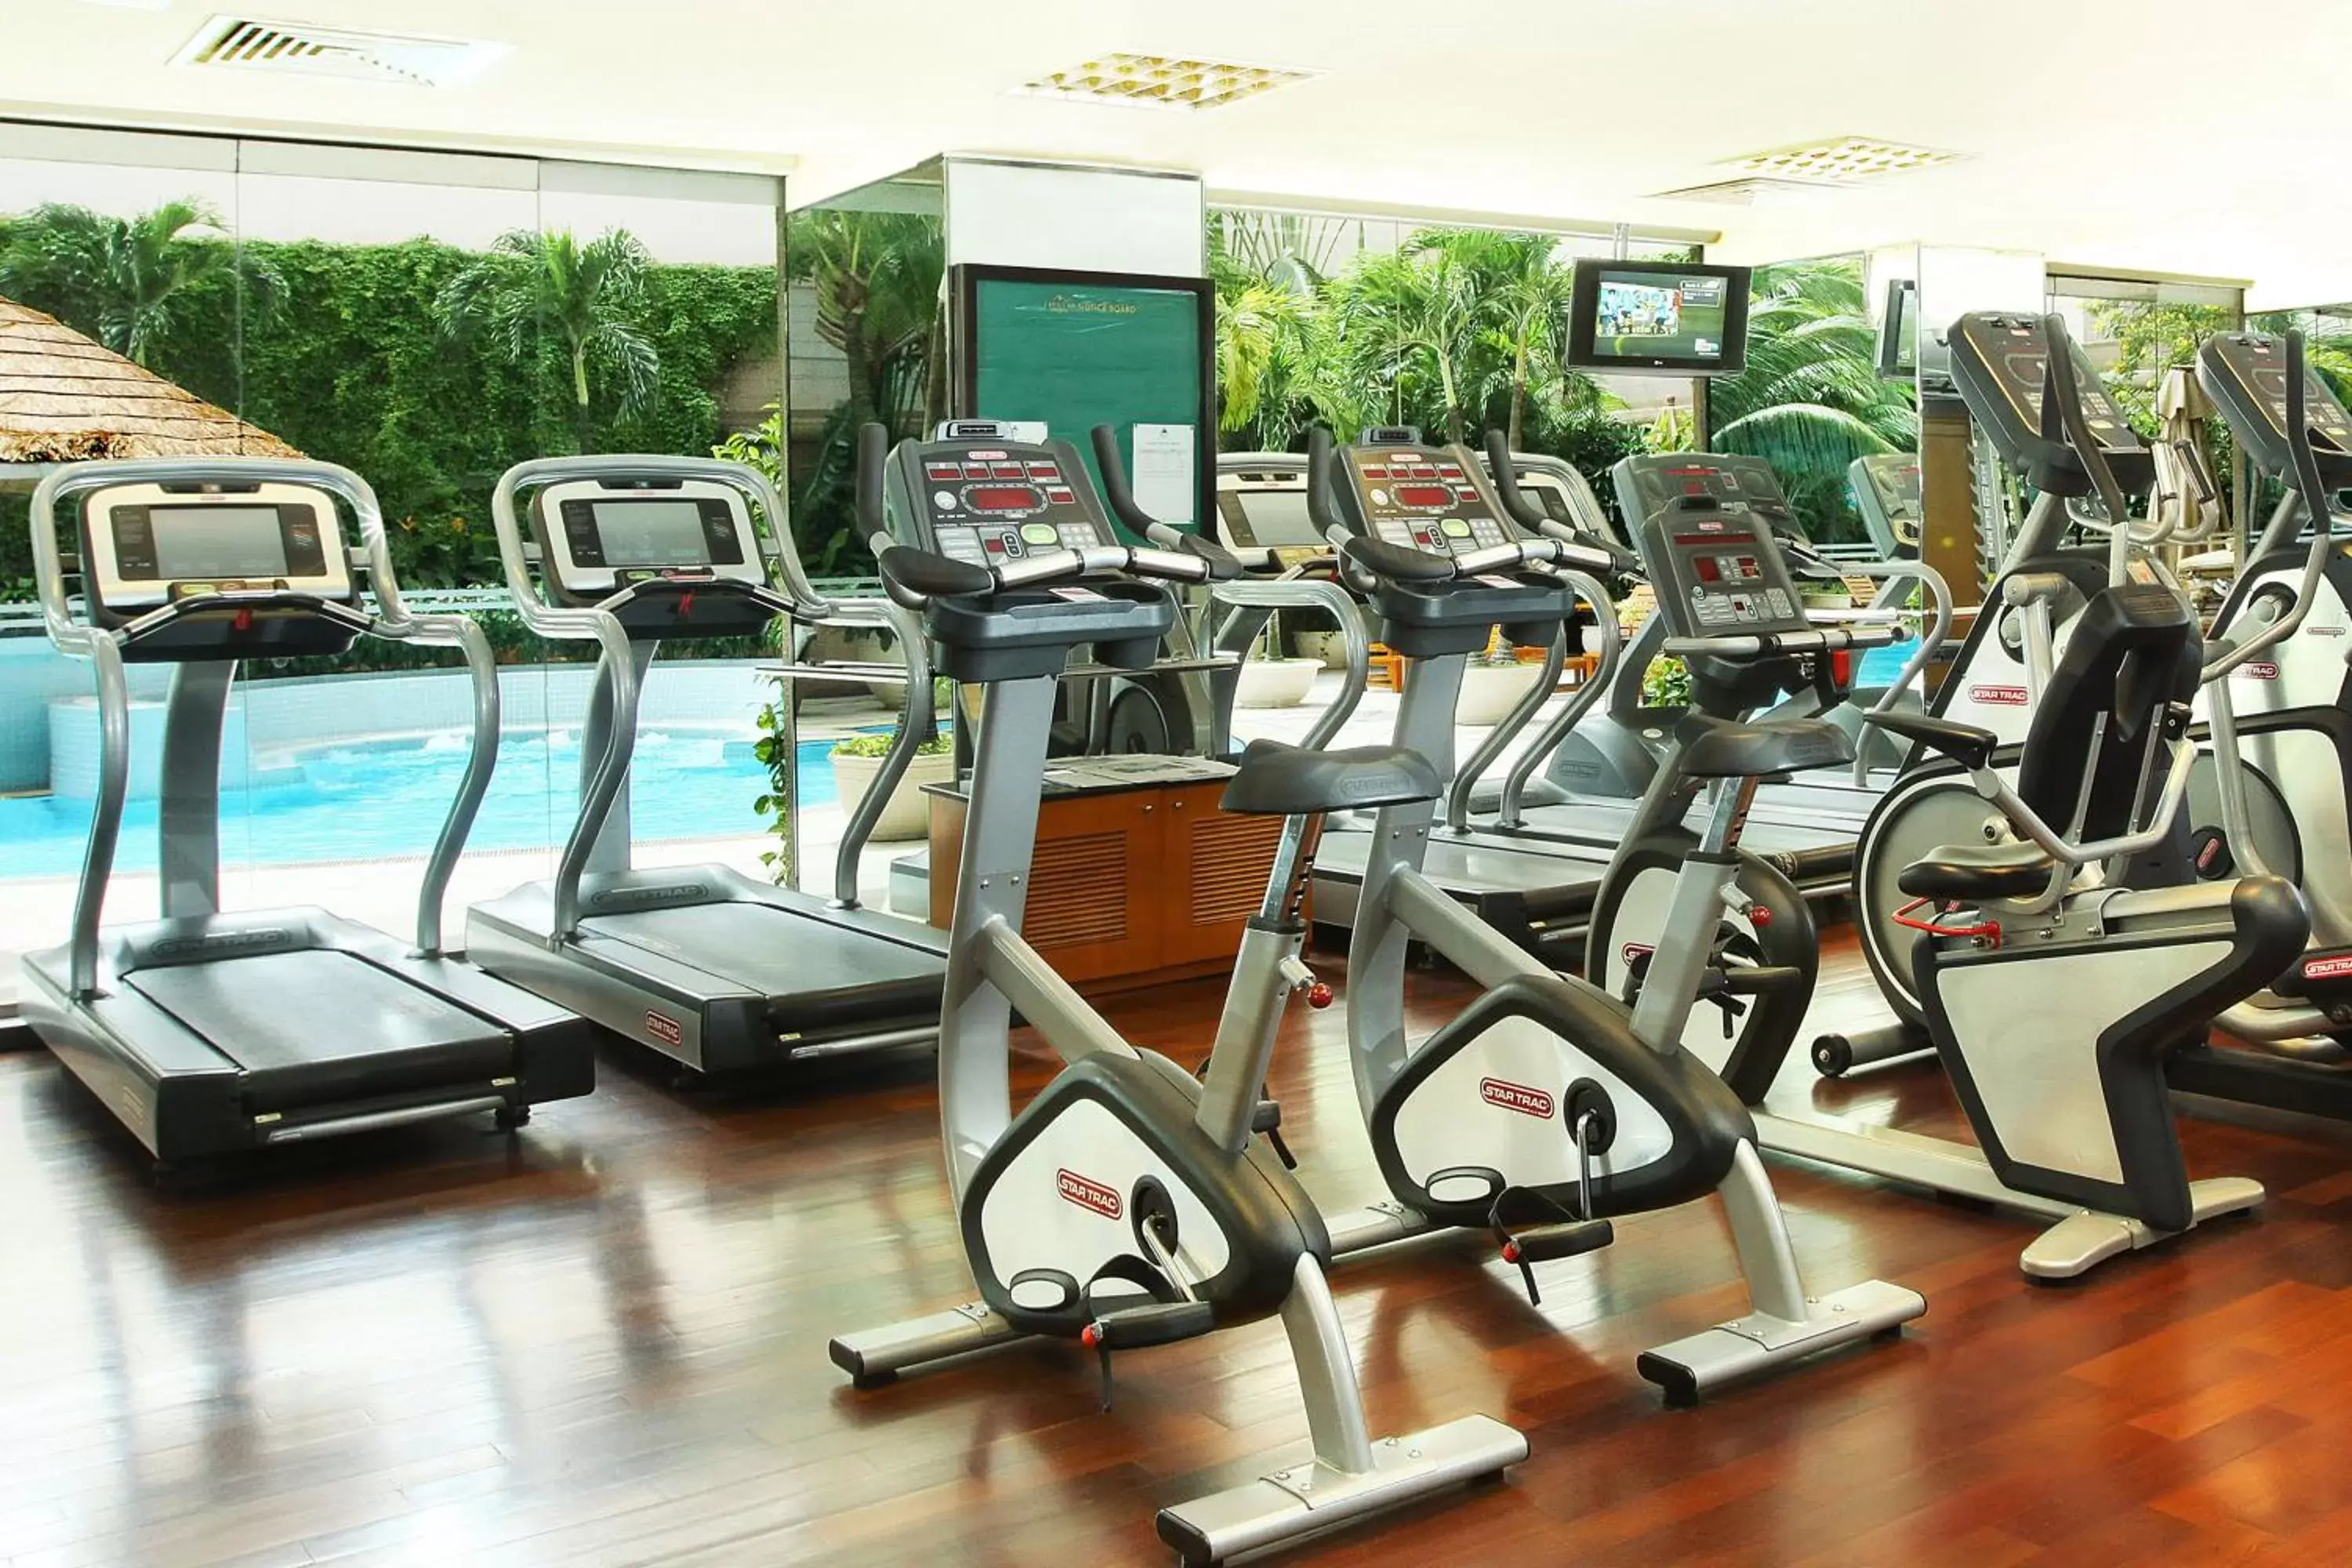 Fitness centre/facilities, Fitness Center/Facilities in Caravelle Saigon